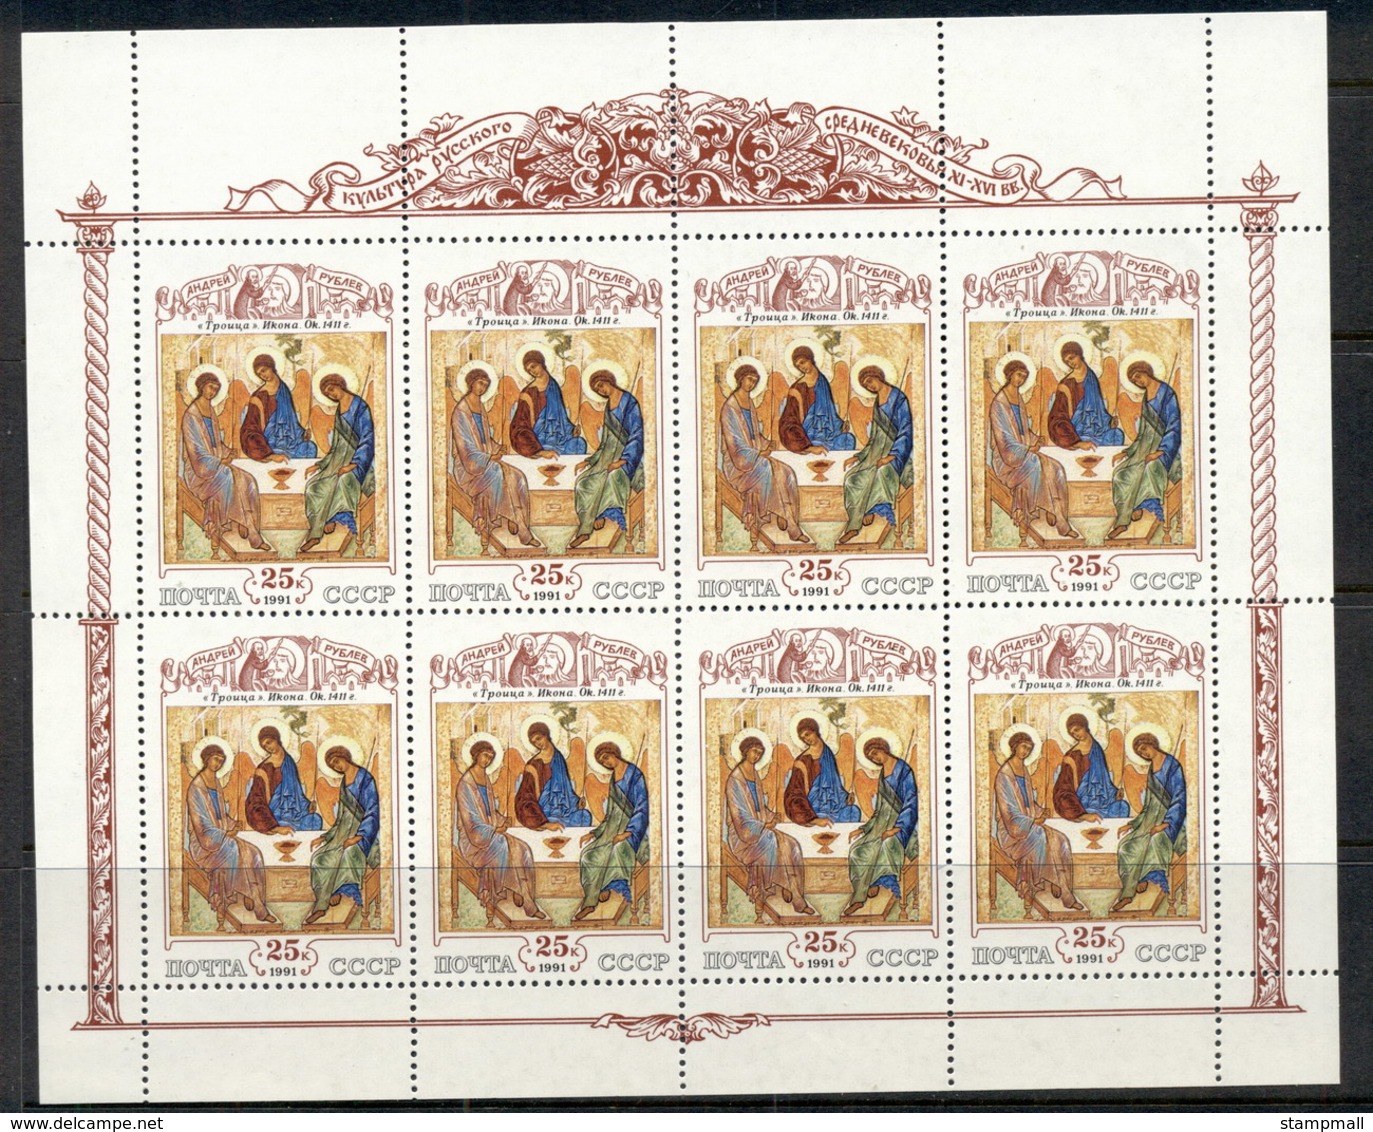 Russia 1991 Ikons 25k Sheetlet MUH - Used Stamps